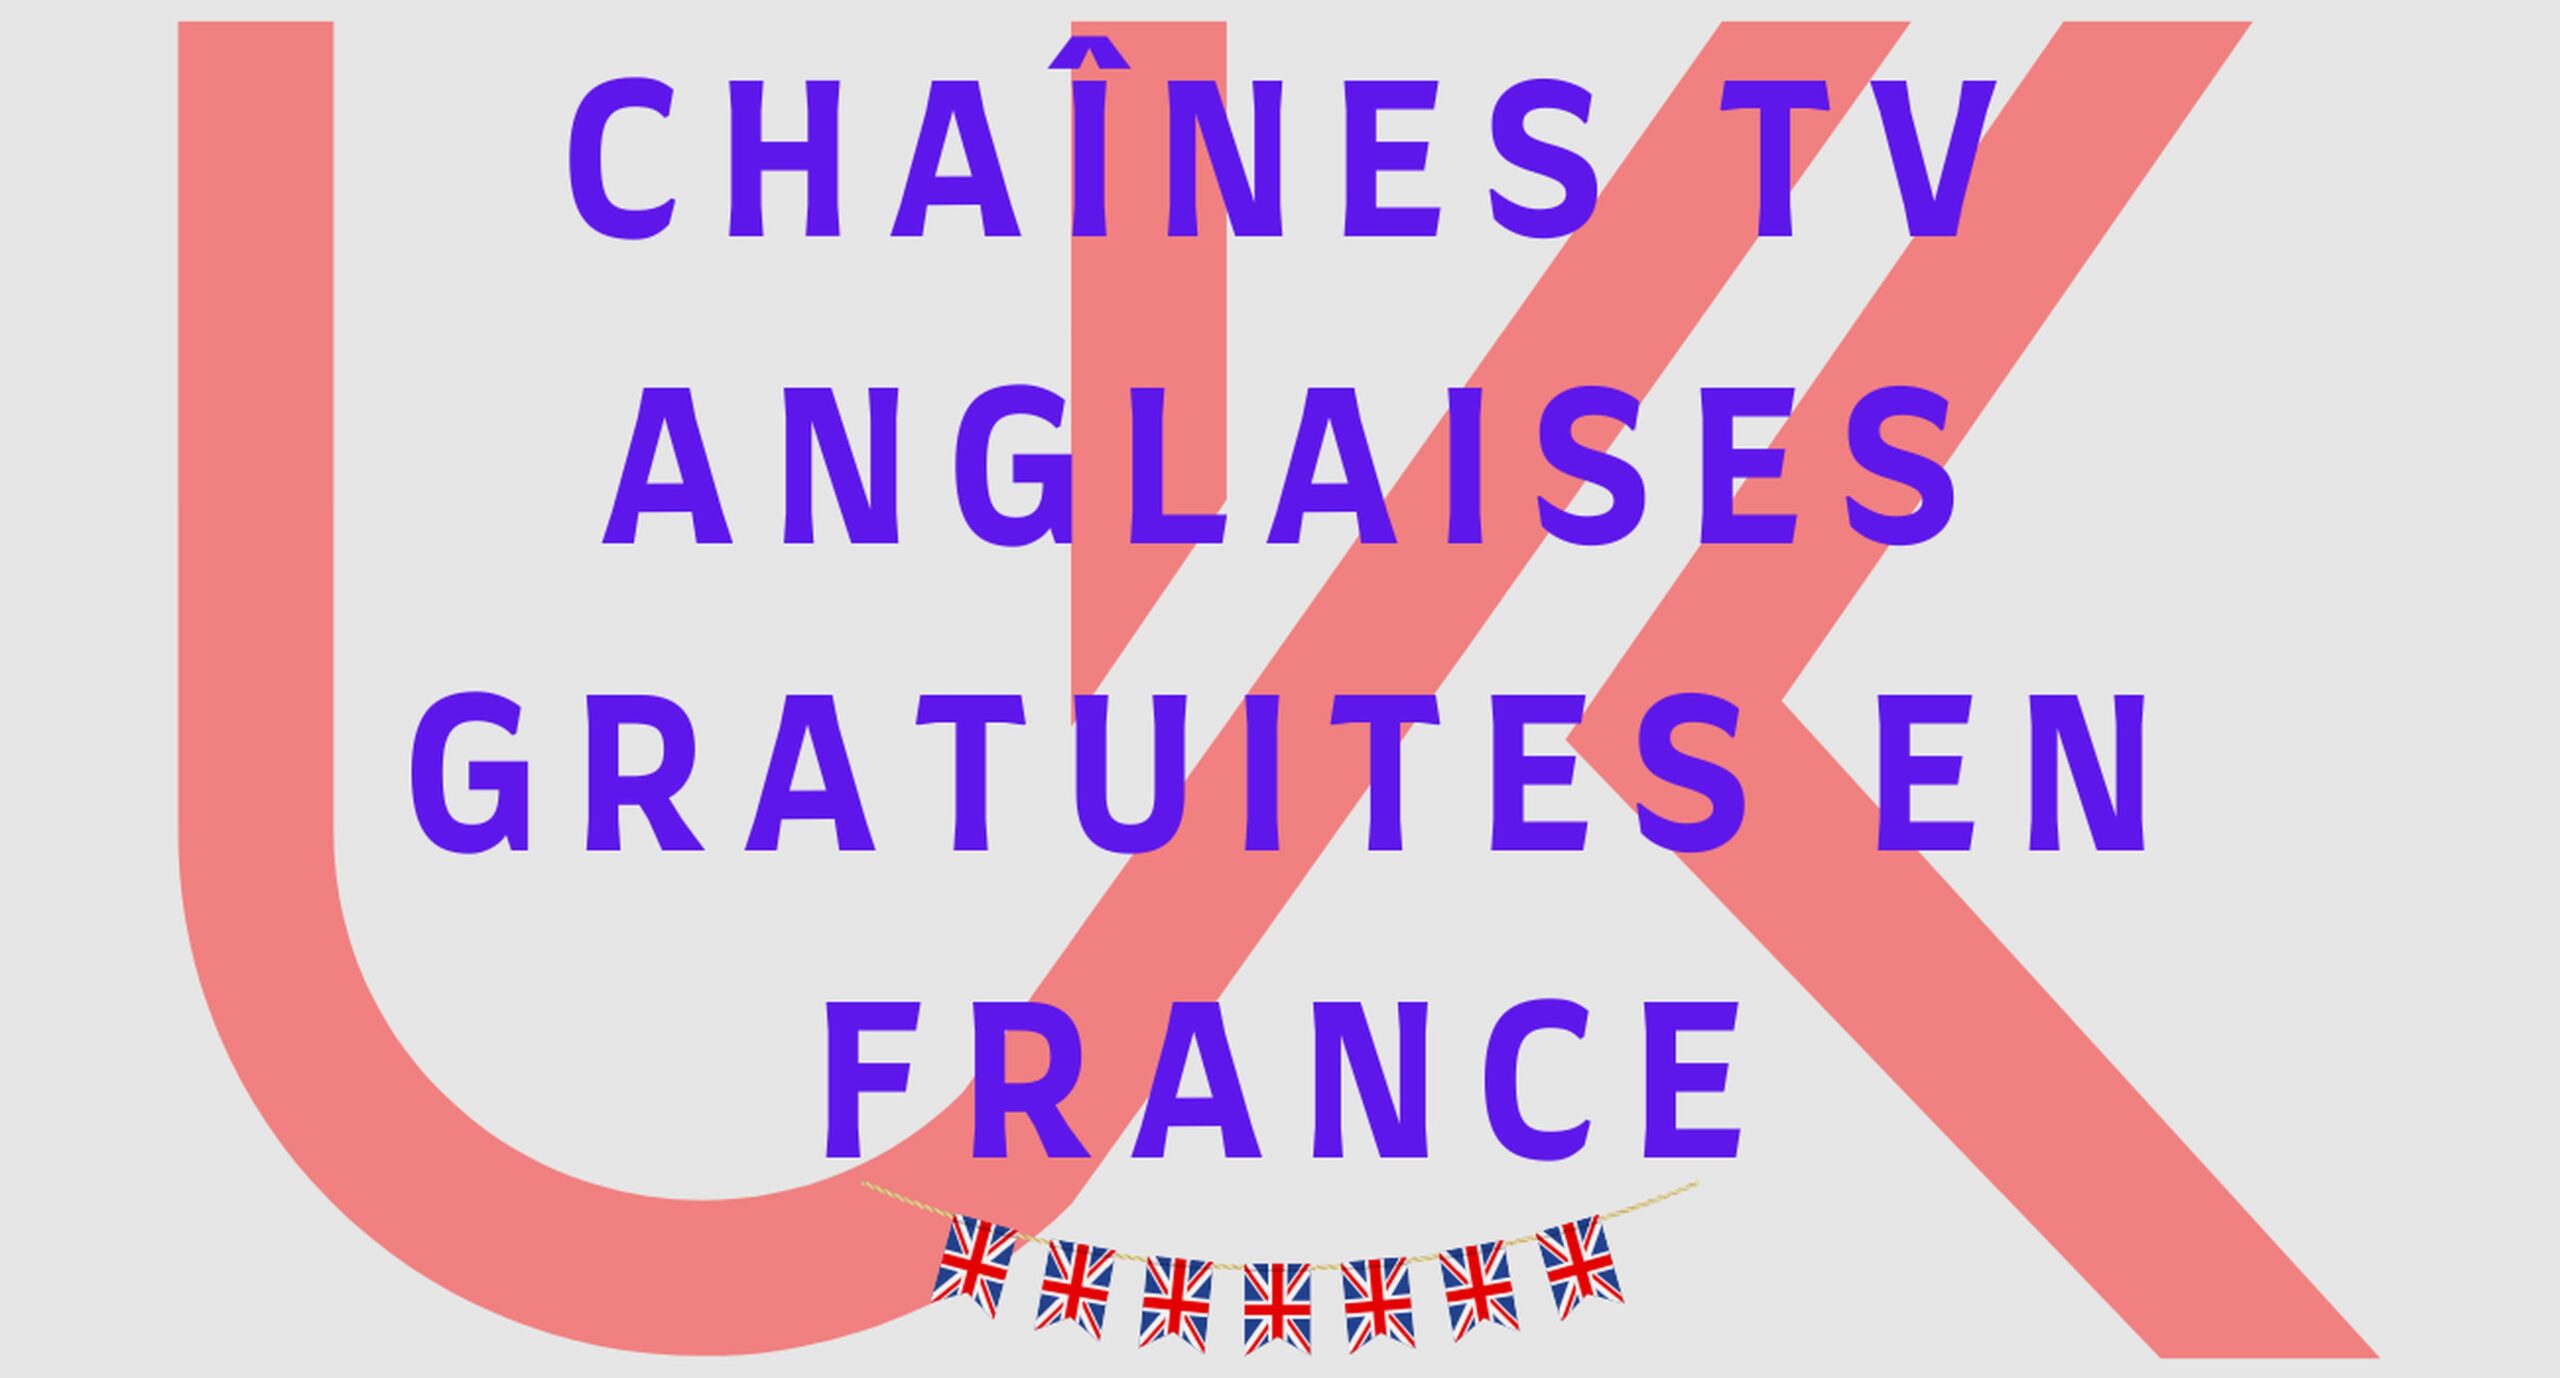 Chaînes TV Anglaises gratuites en France - 55 Chaînes TV disponibles 9